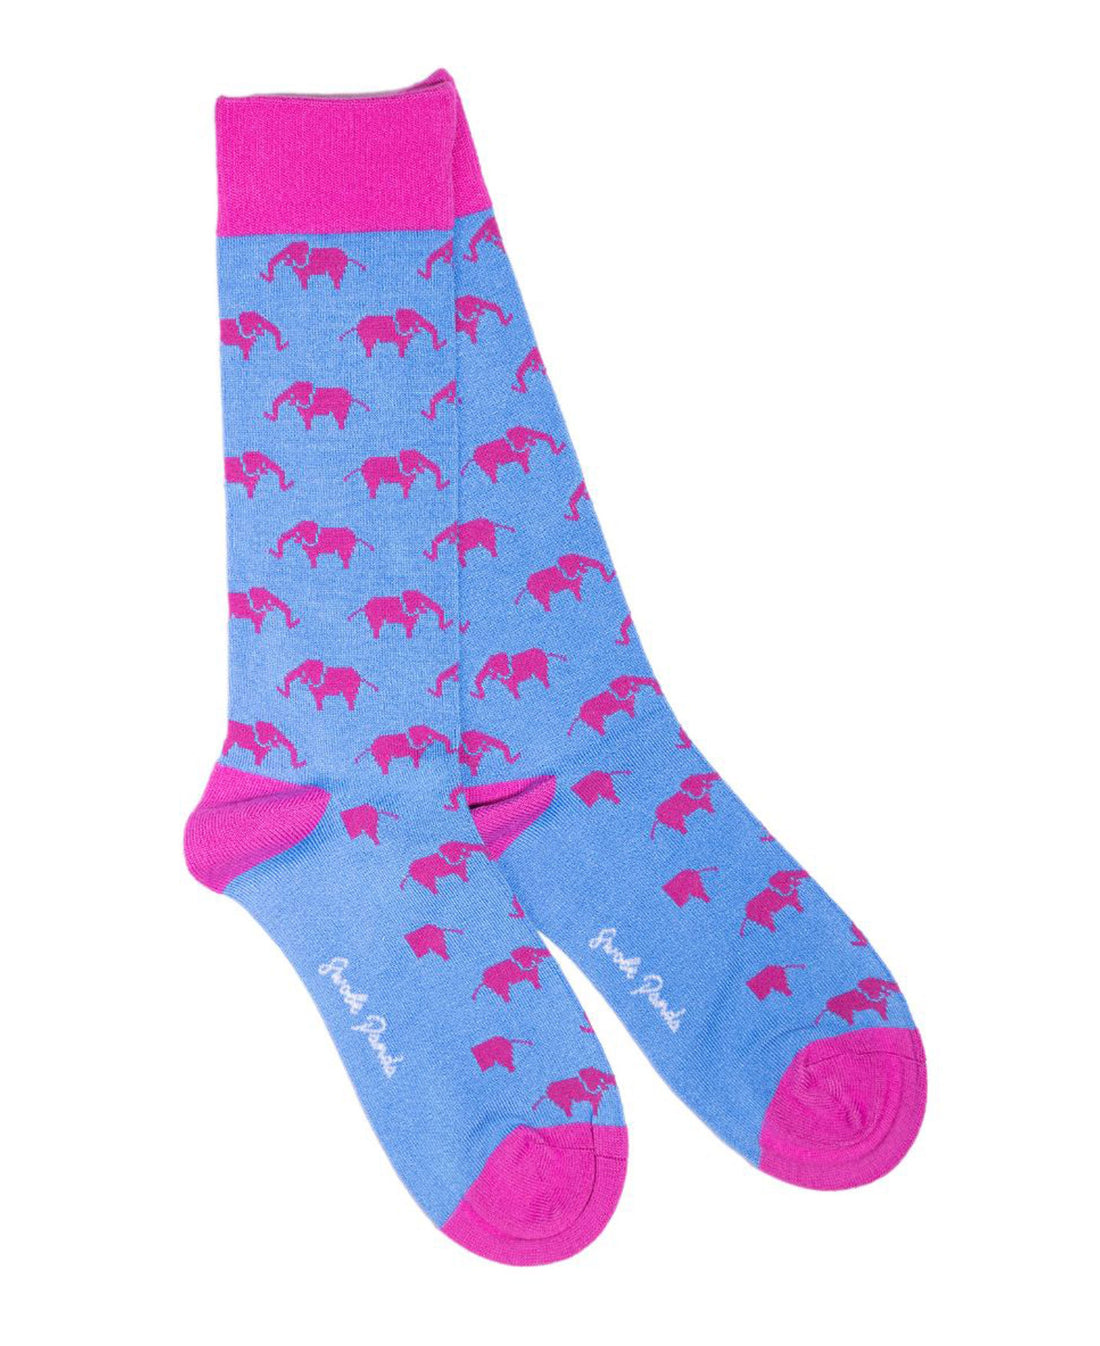 Patterned Socks - Elephant